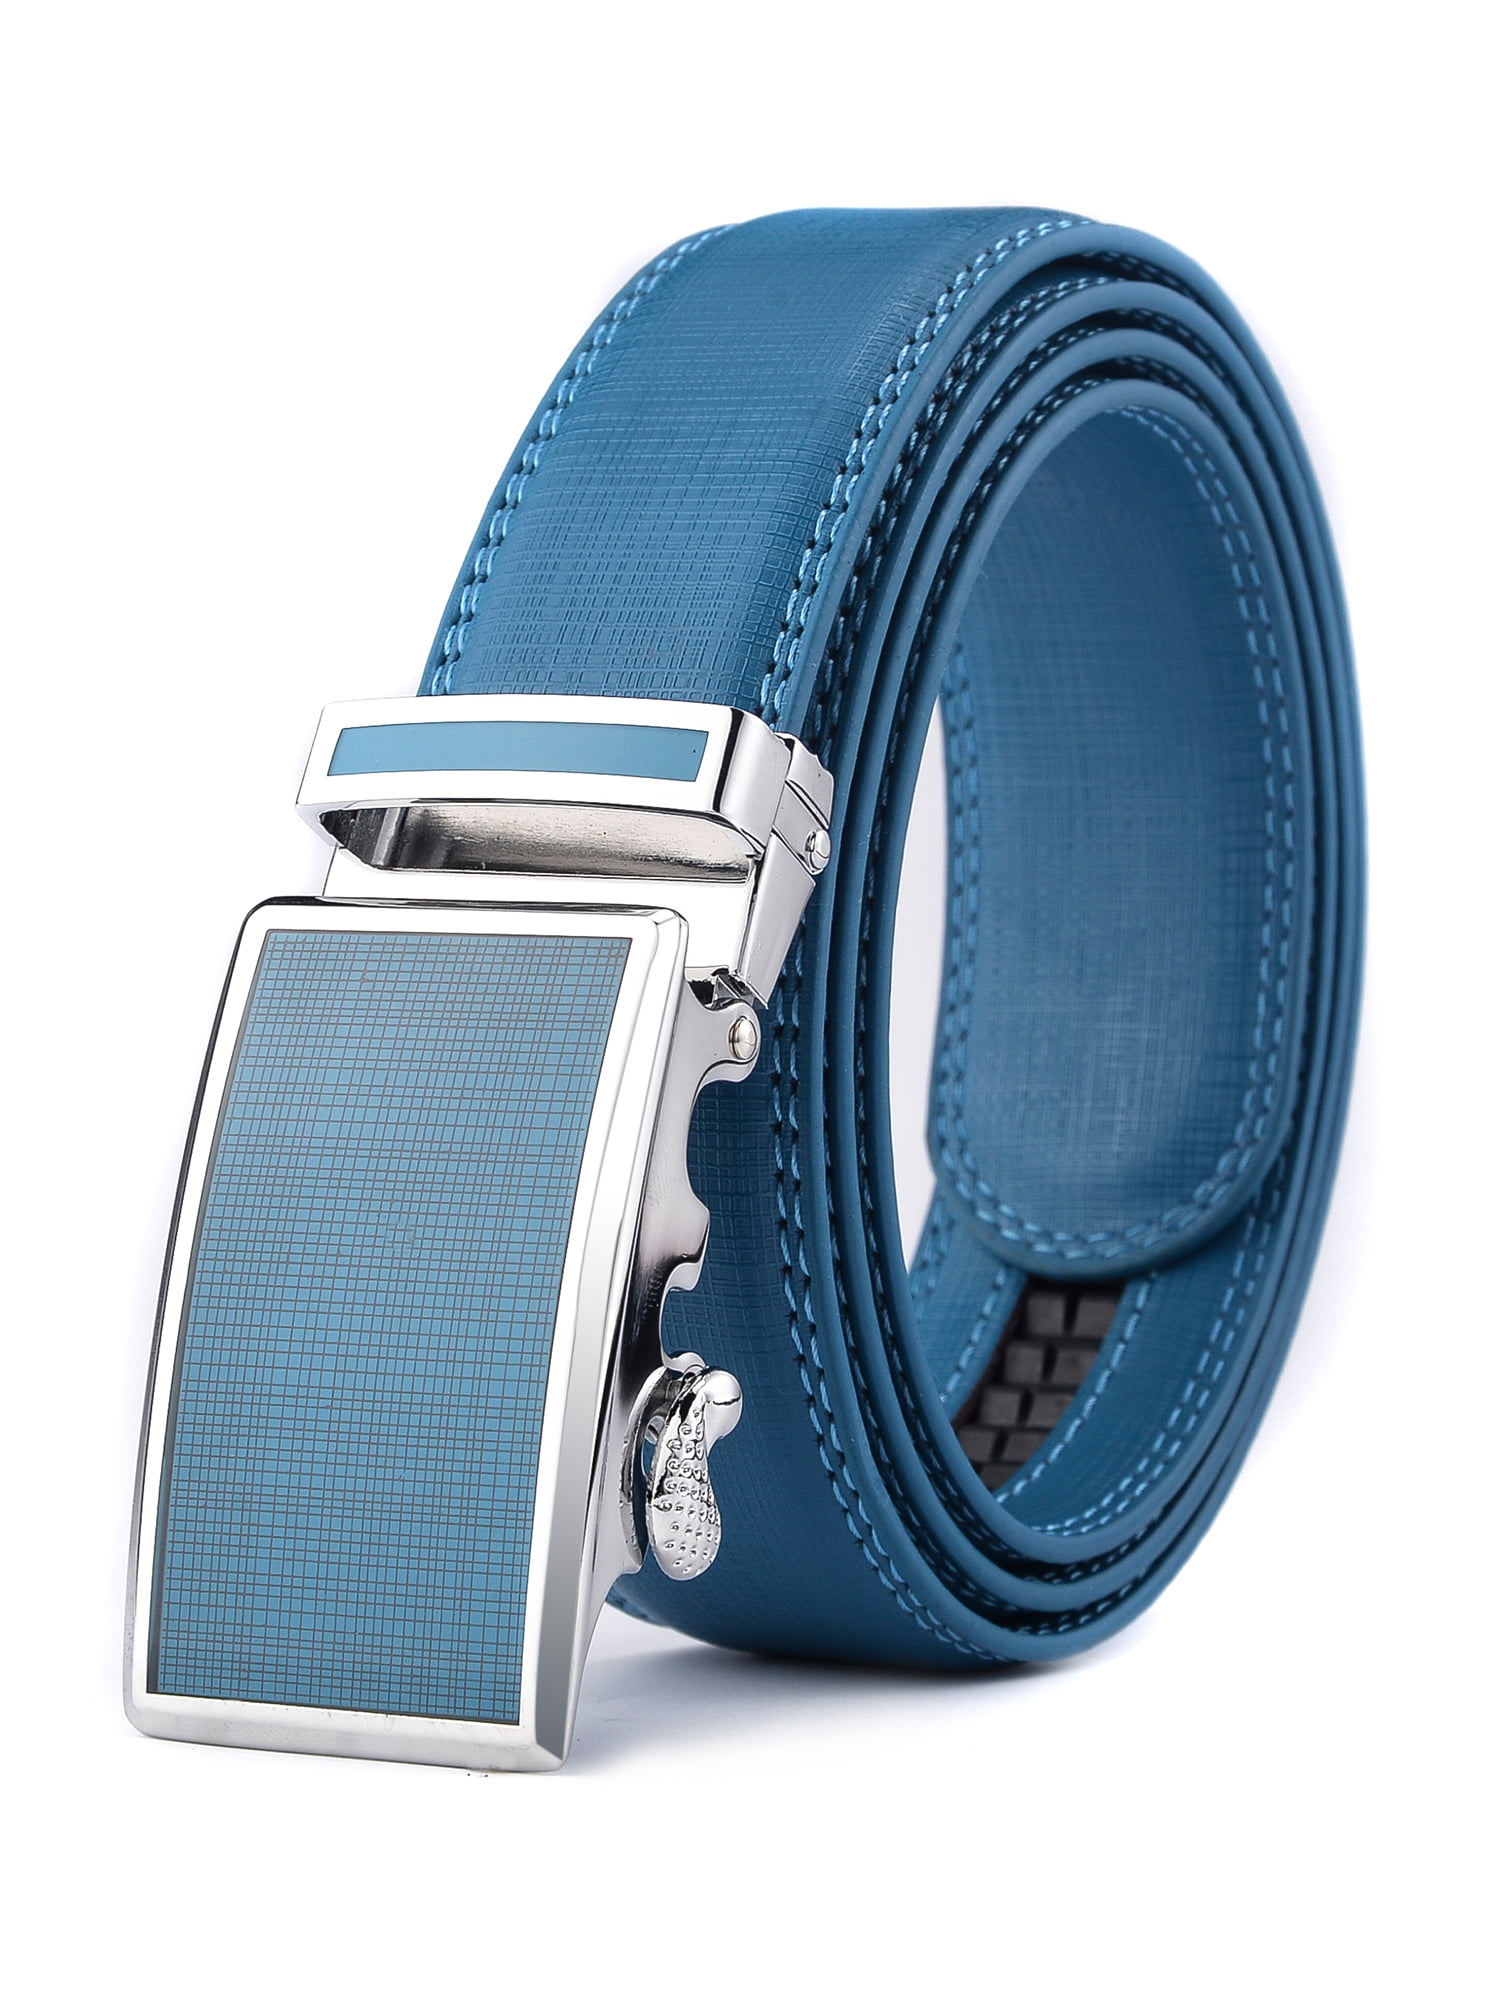 Nike - Mens Ratchet Color Belt Automatic Buckle Genuine Leather belt ...